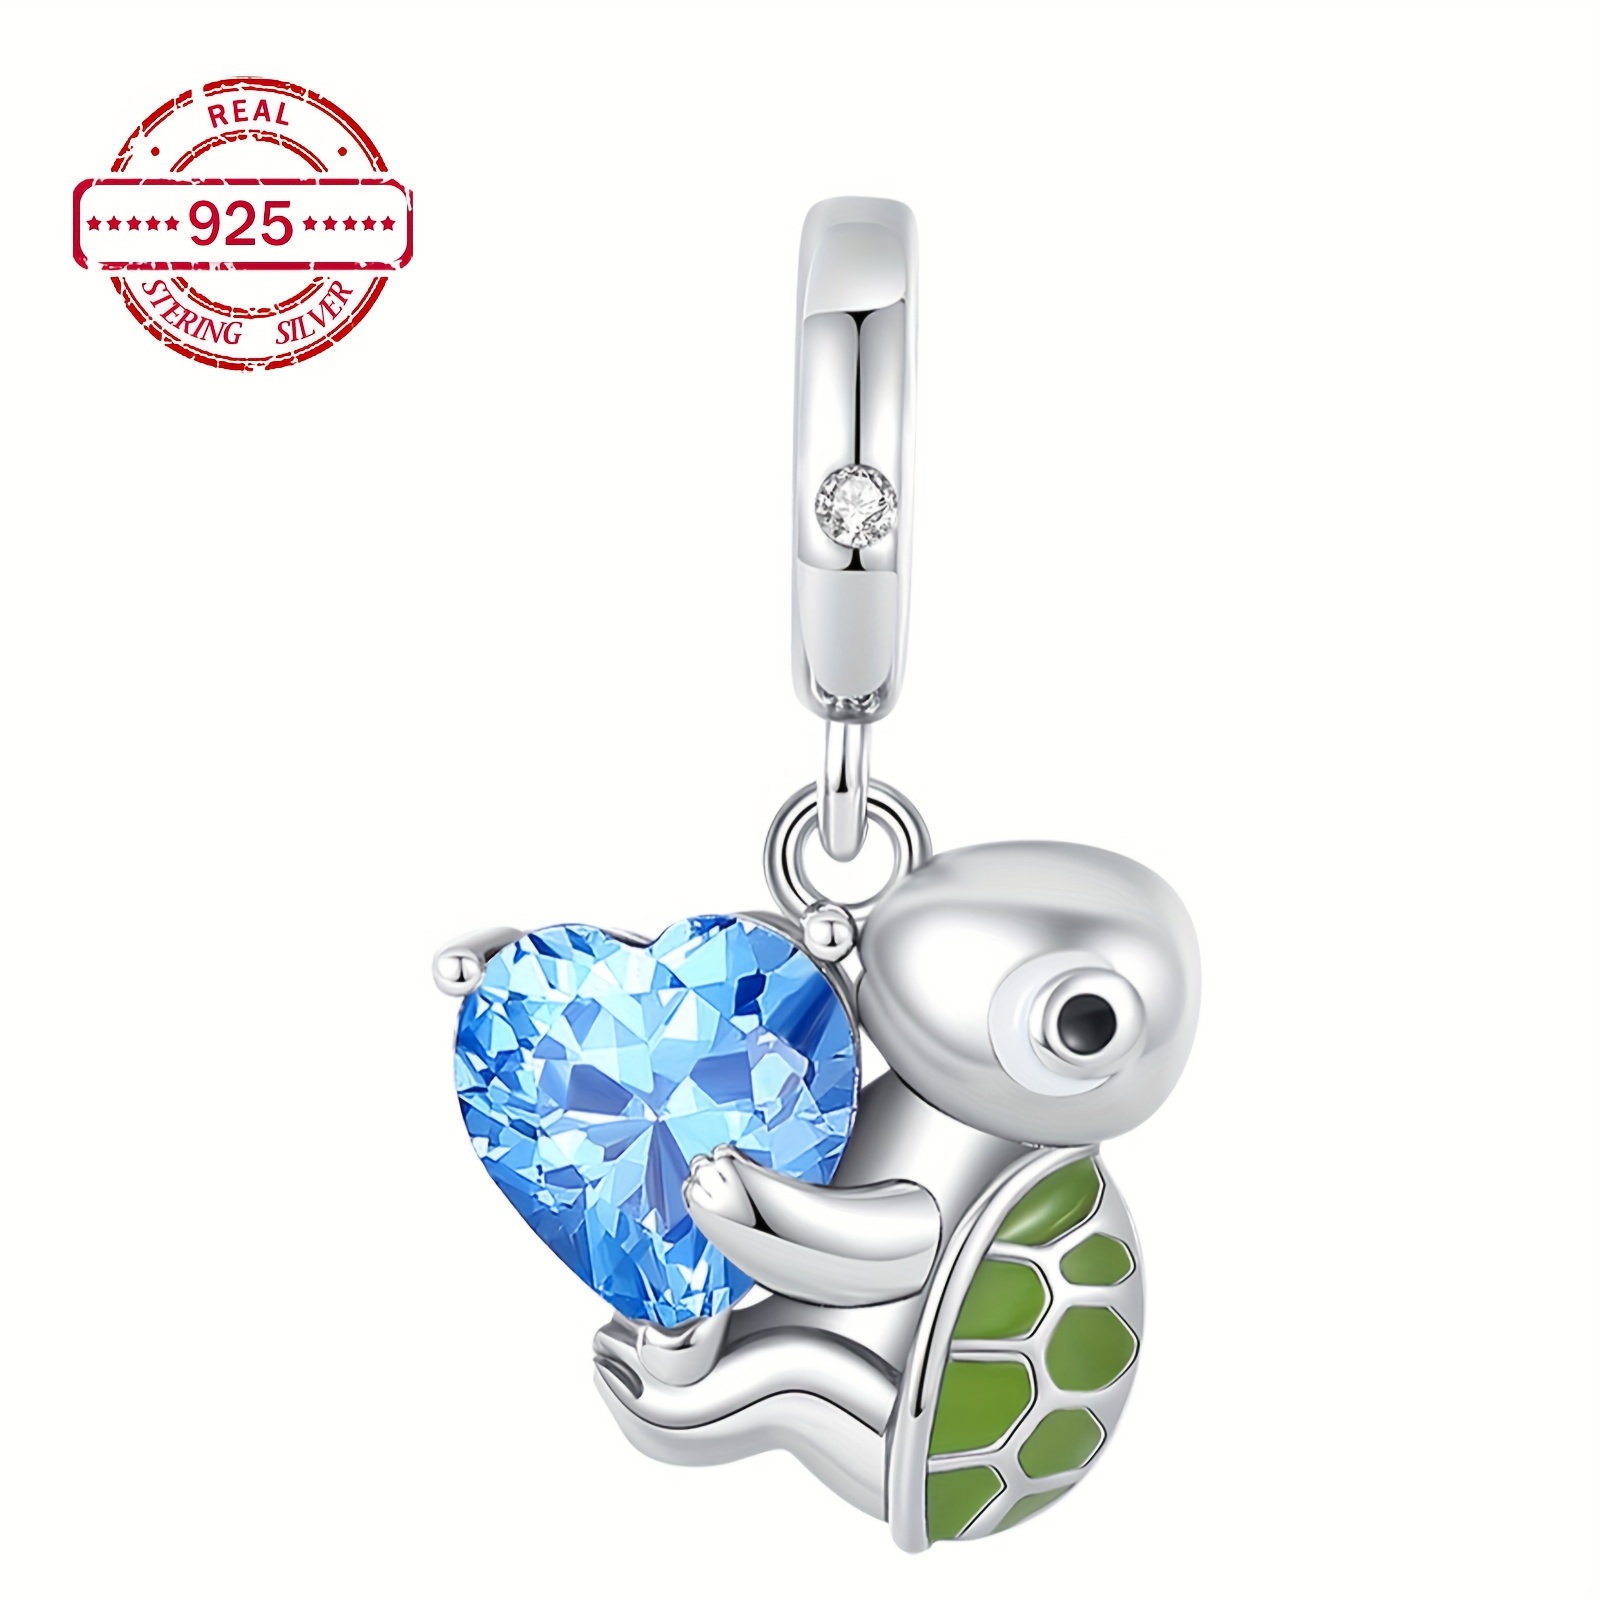 

S925 Sterling Silver Sea Turtle Blue Heart Dangle Charm Pendant Fit Women European Moment Bracelet & Necklace Luxury Gift Diy Jewelry Making